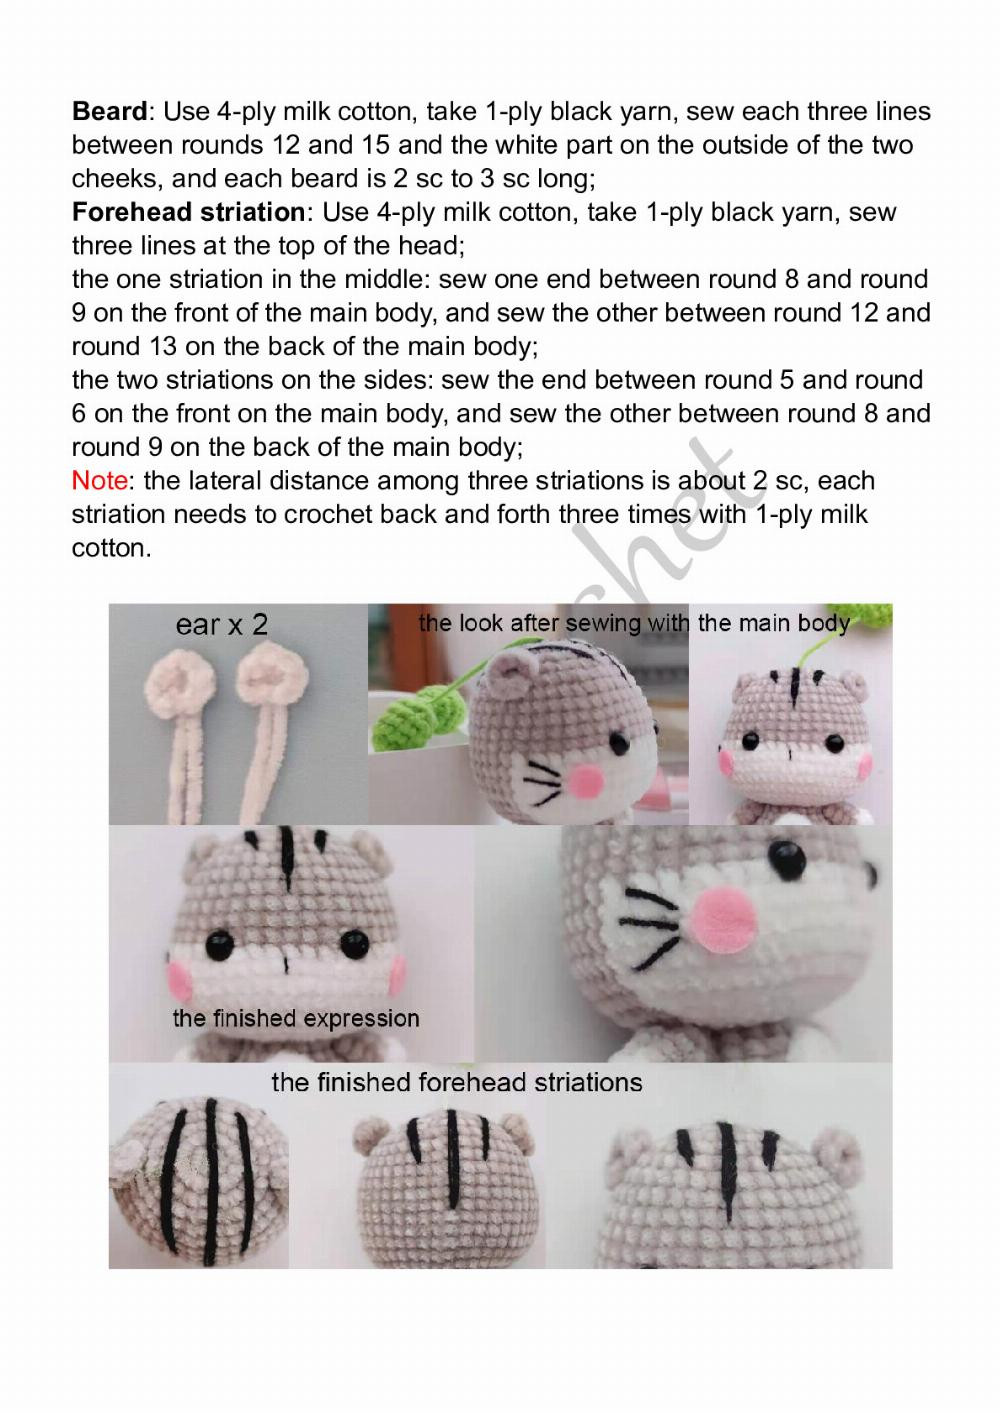 bud family cat crochet pattern